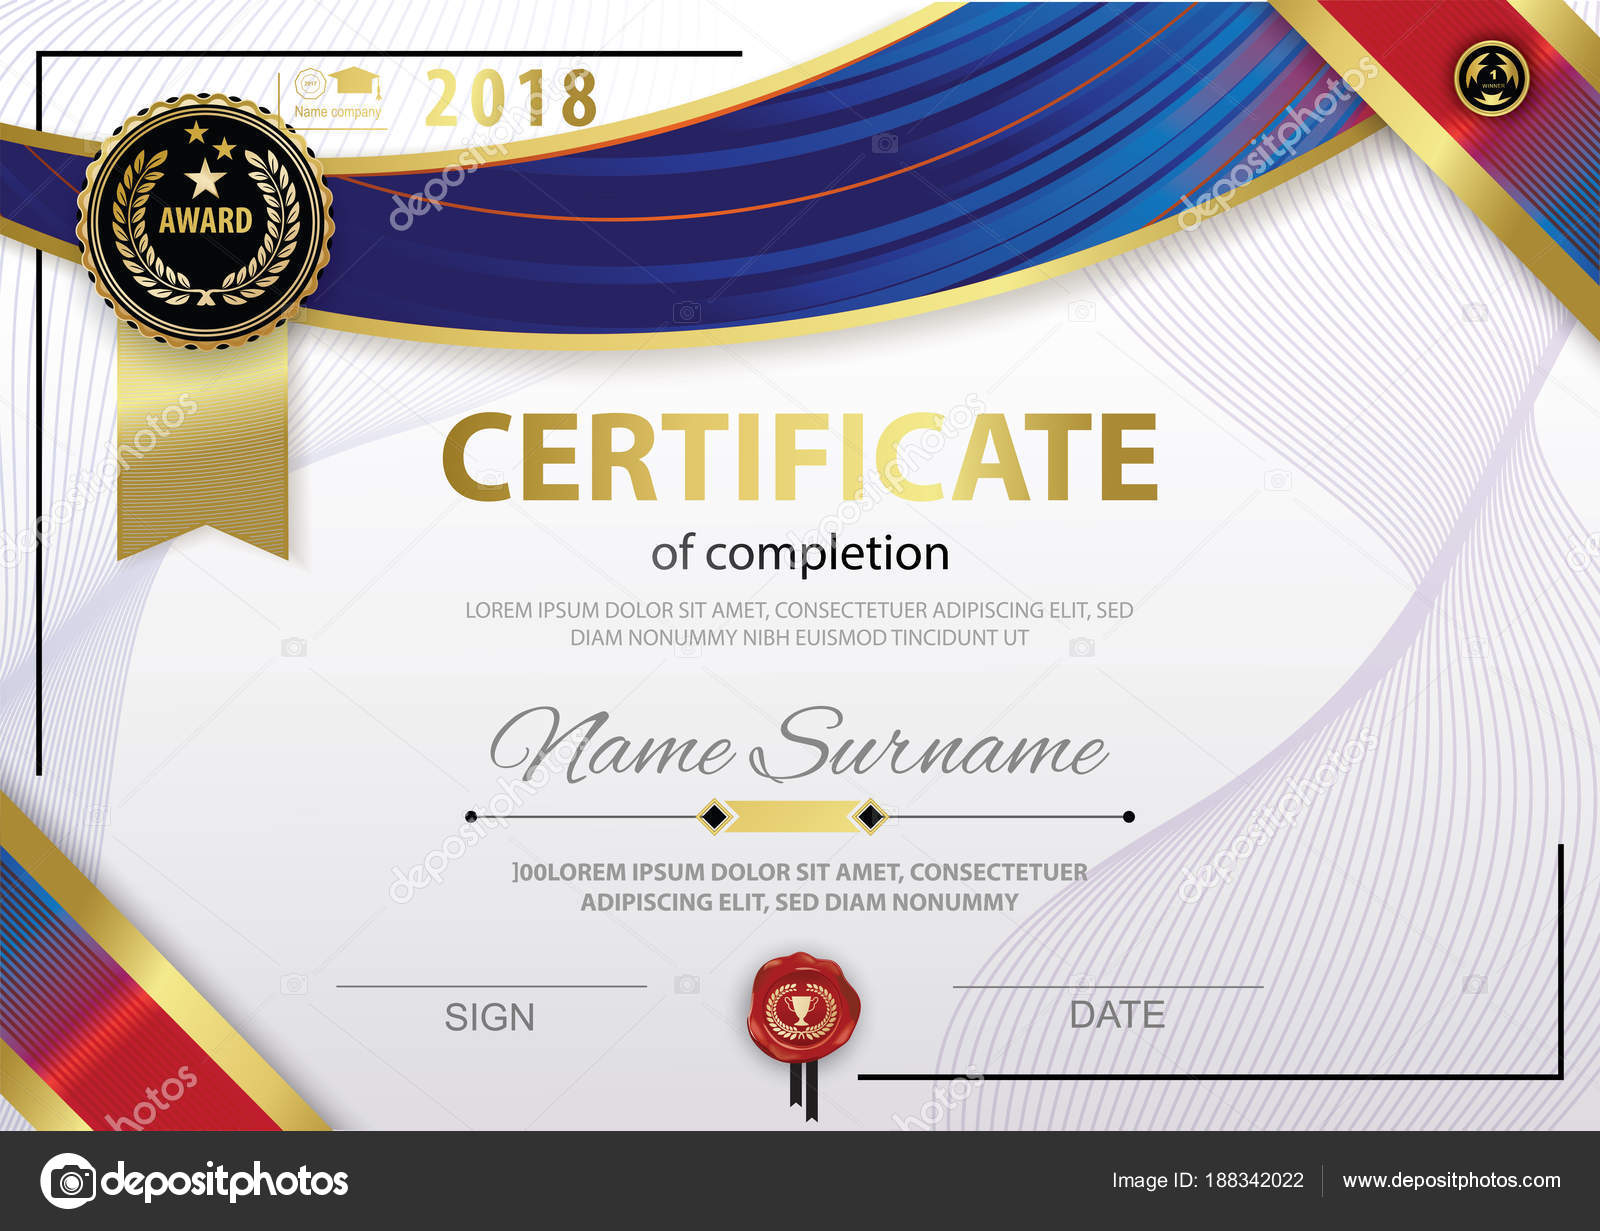 depositphotos_188342022-stock-illustration-official-white-certificate-of-appreciation.jpg